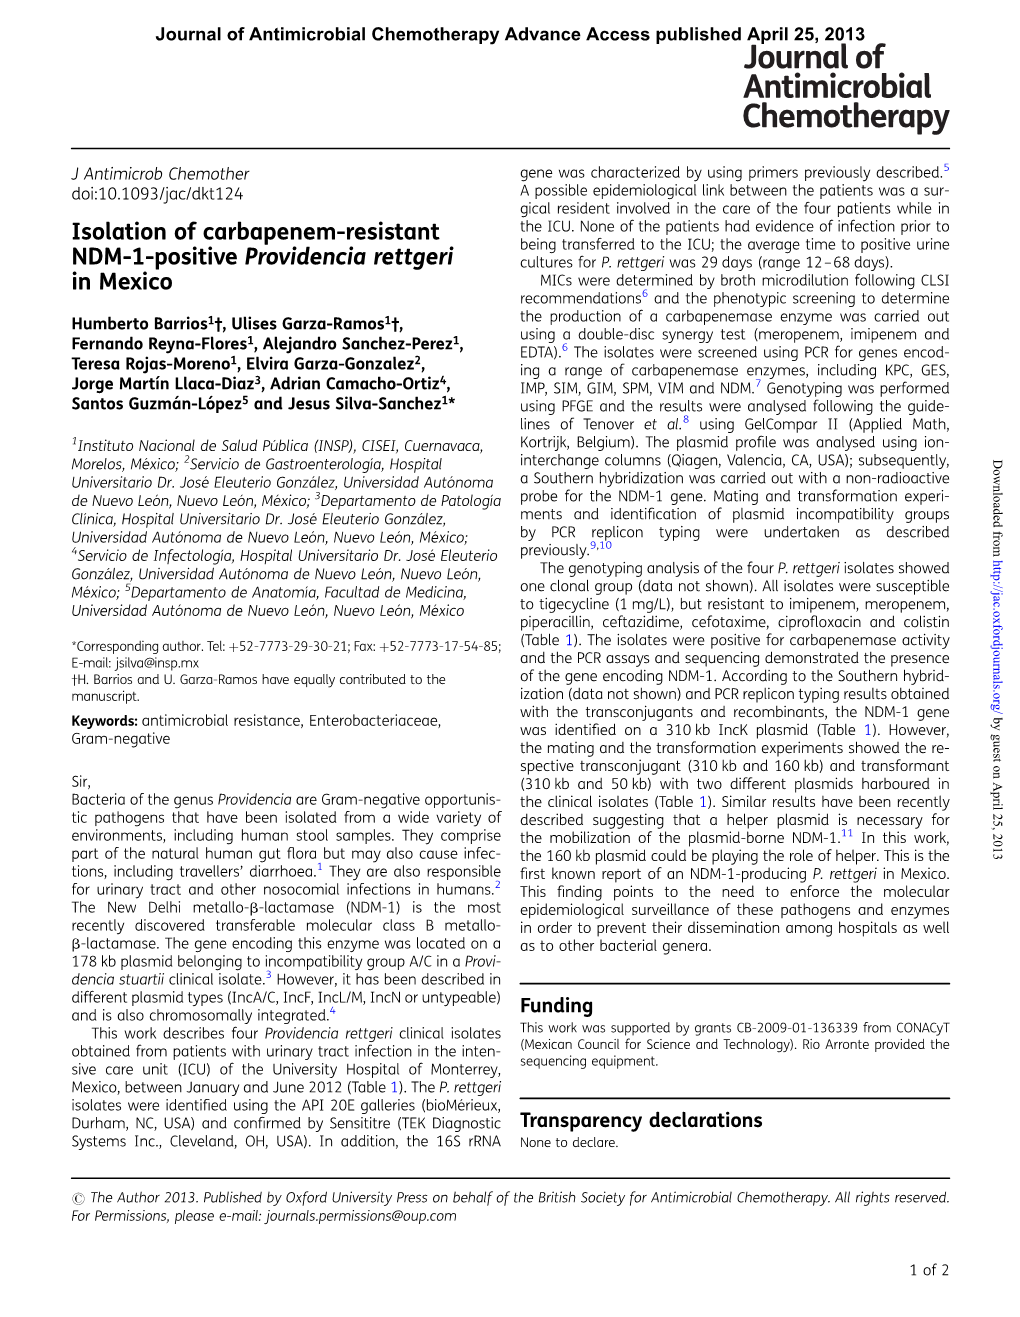 Isolation of Carbapenem-Resistant NDM-1-Positive Providencia Rettgeri